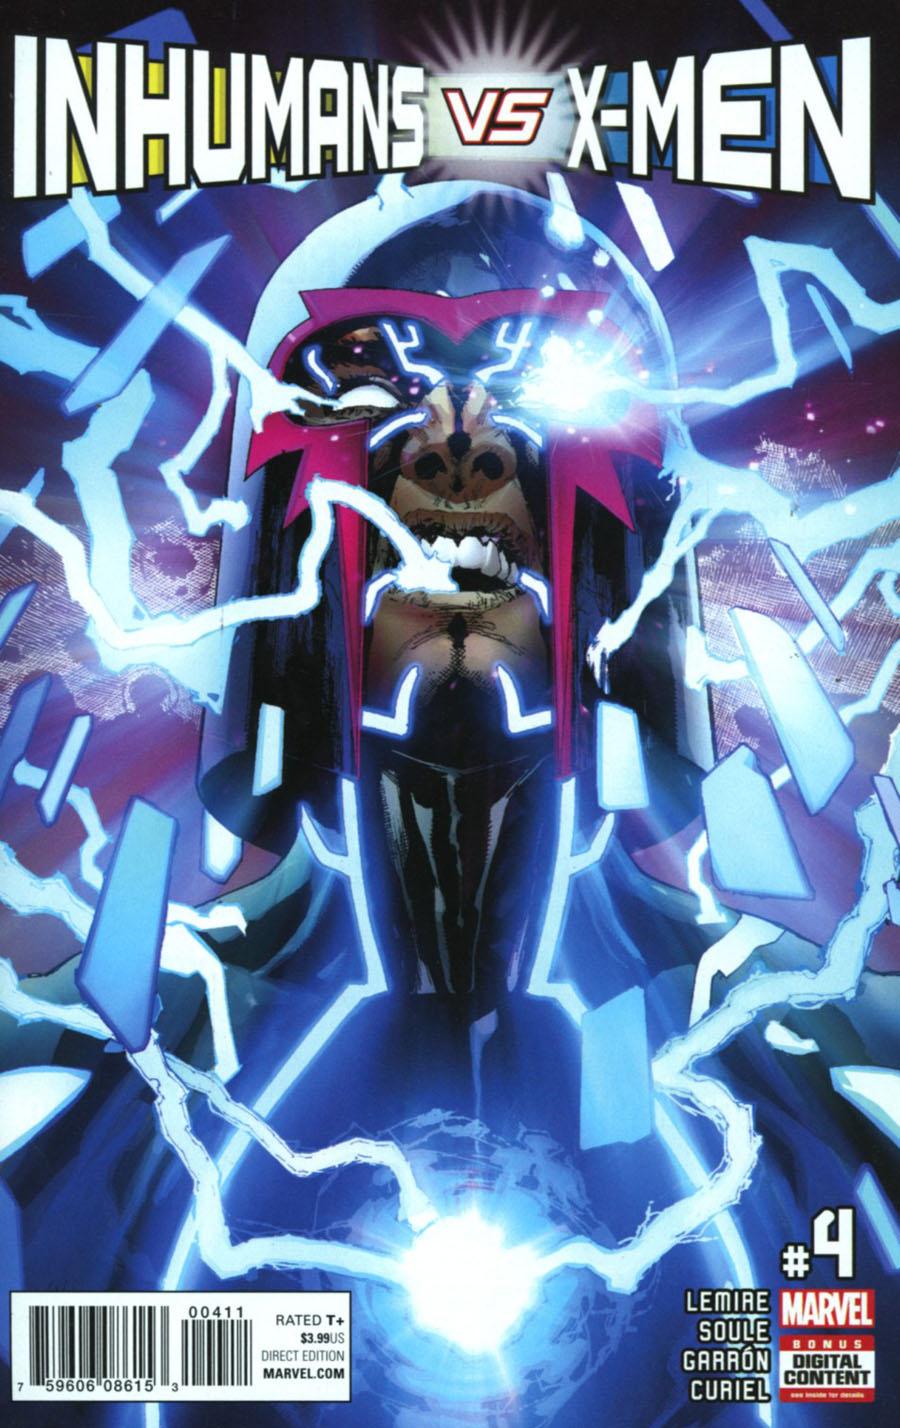 Inhumans vs X-Men Vol. 1 #4